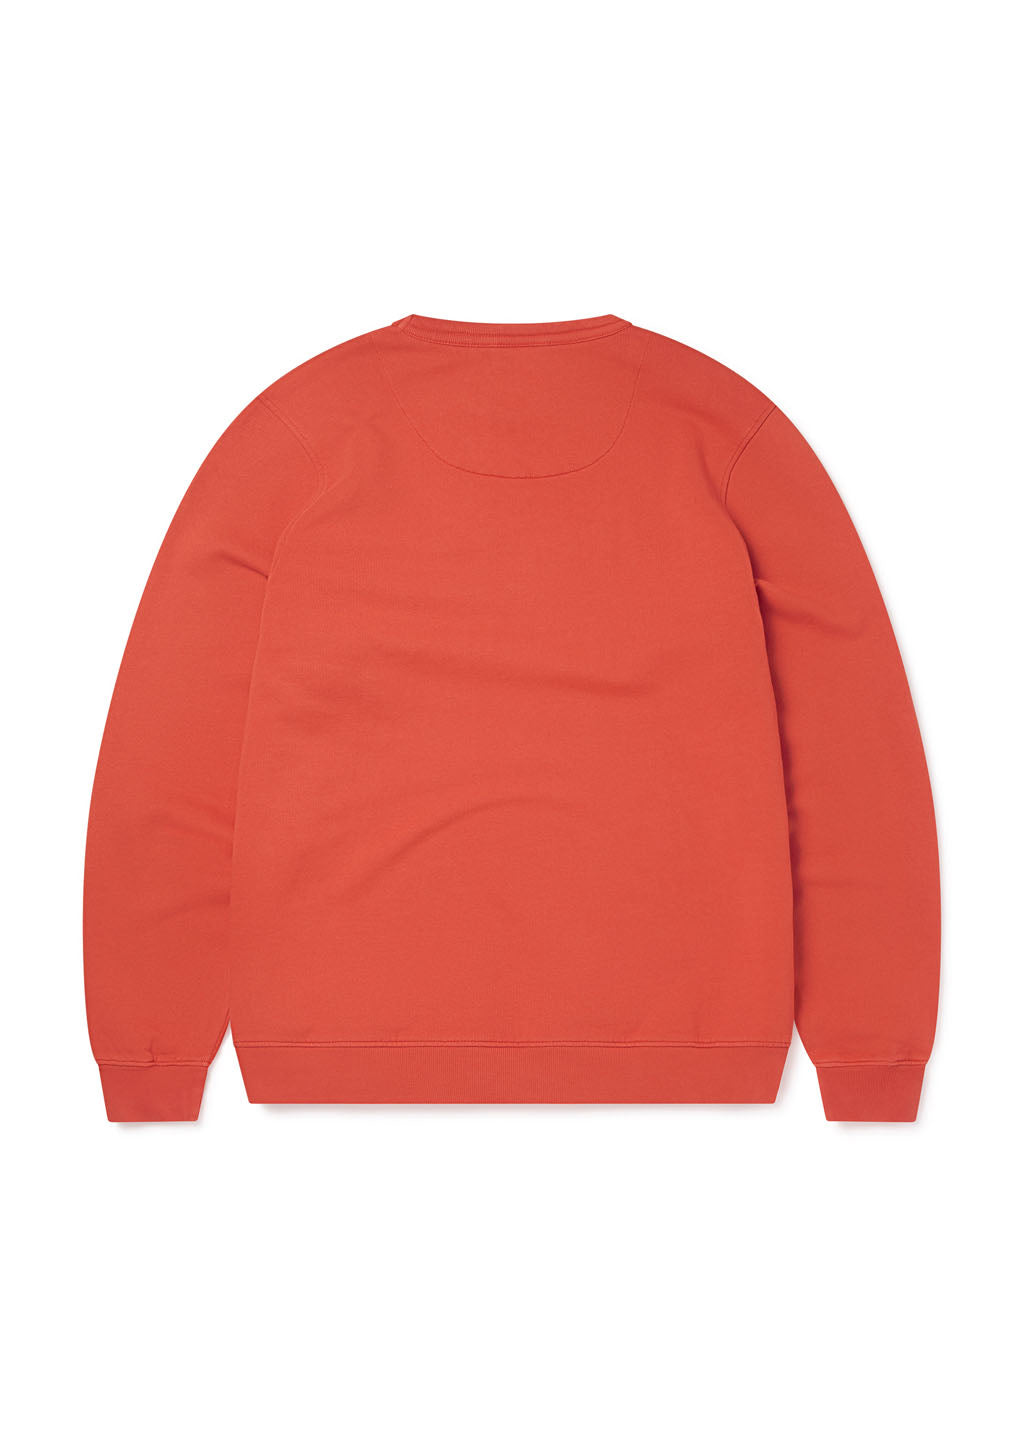 Vintage Lightweight Sweatshirt in Burnt Orange